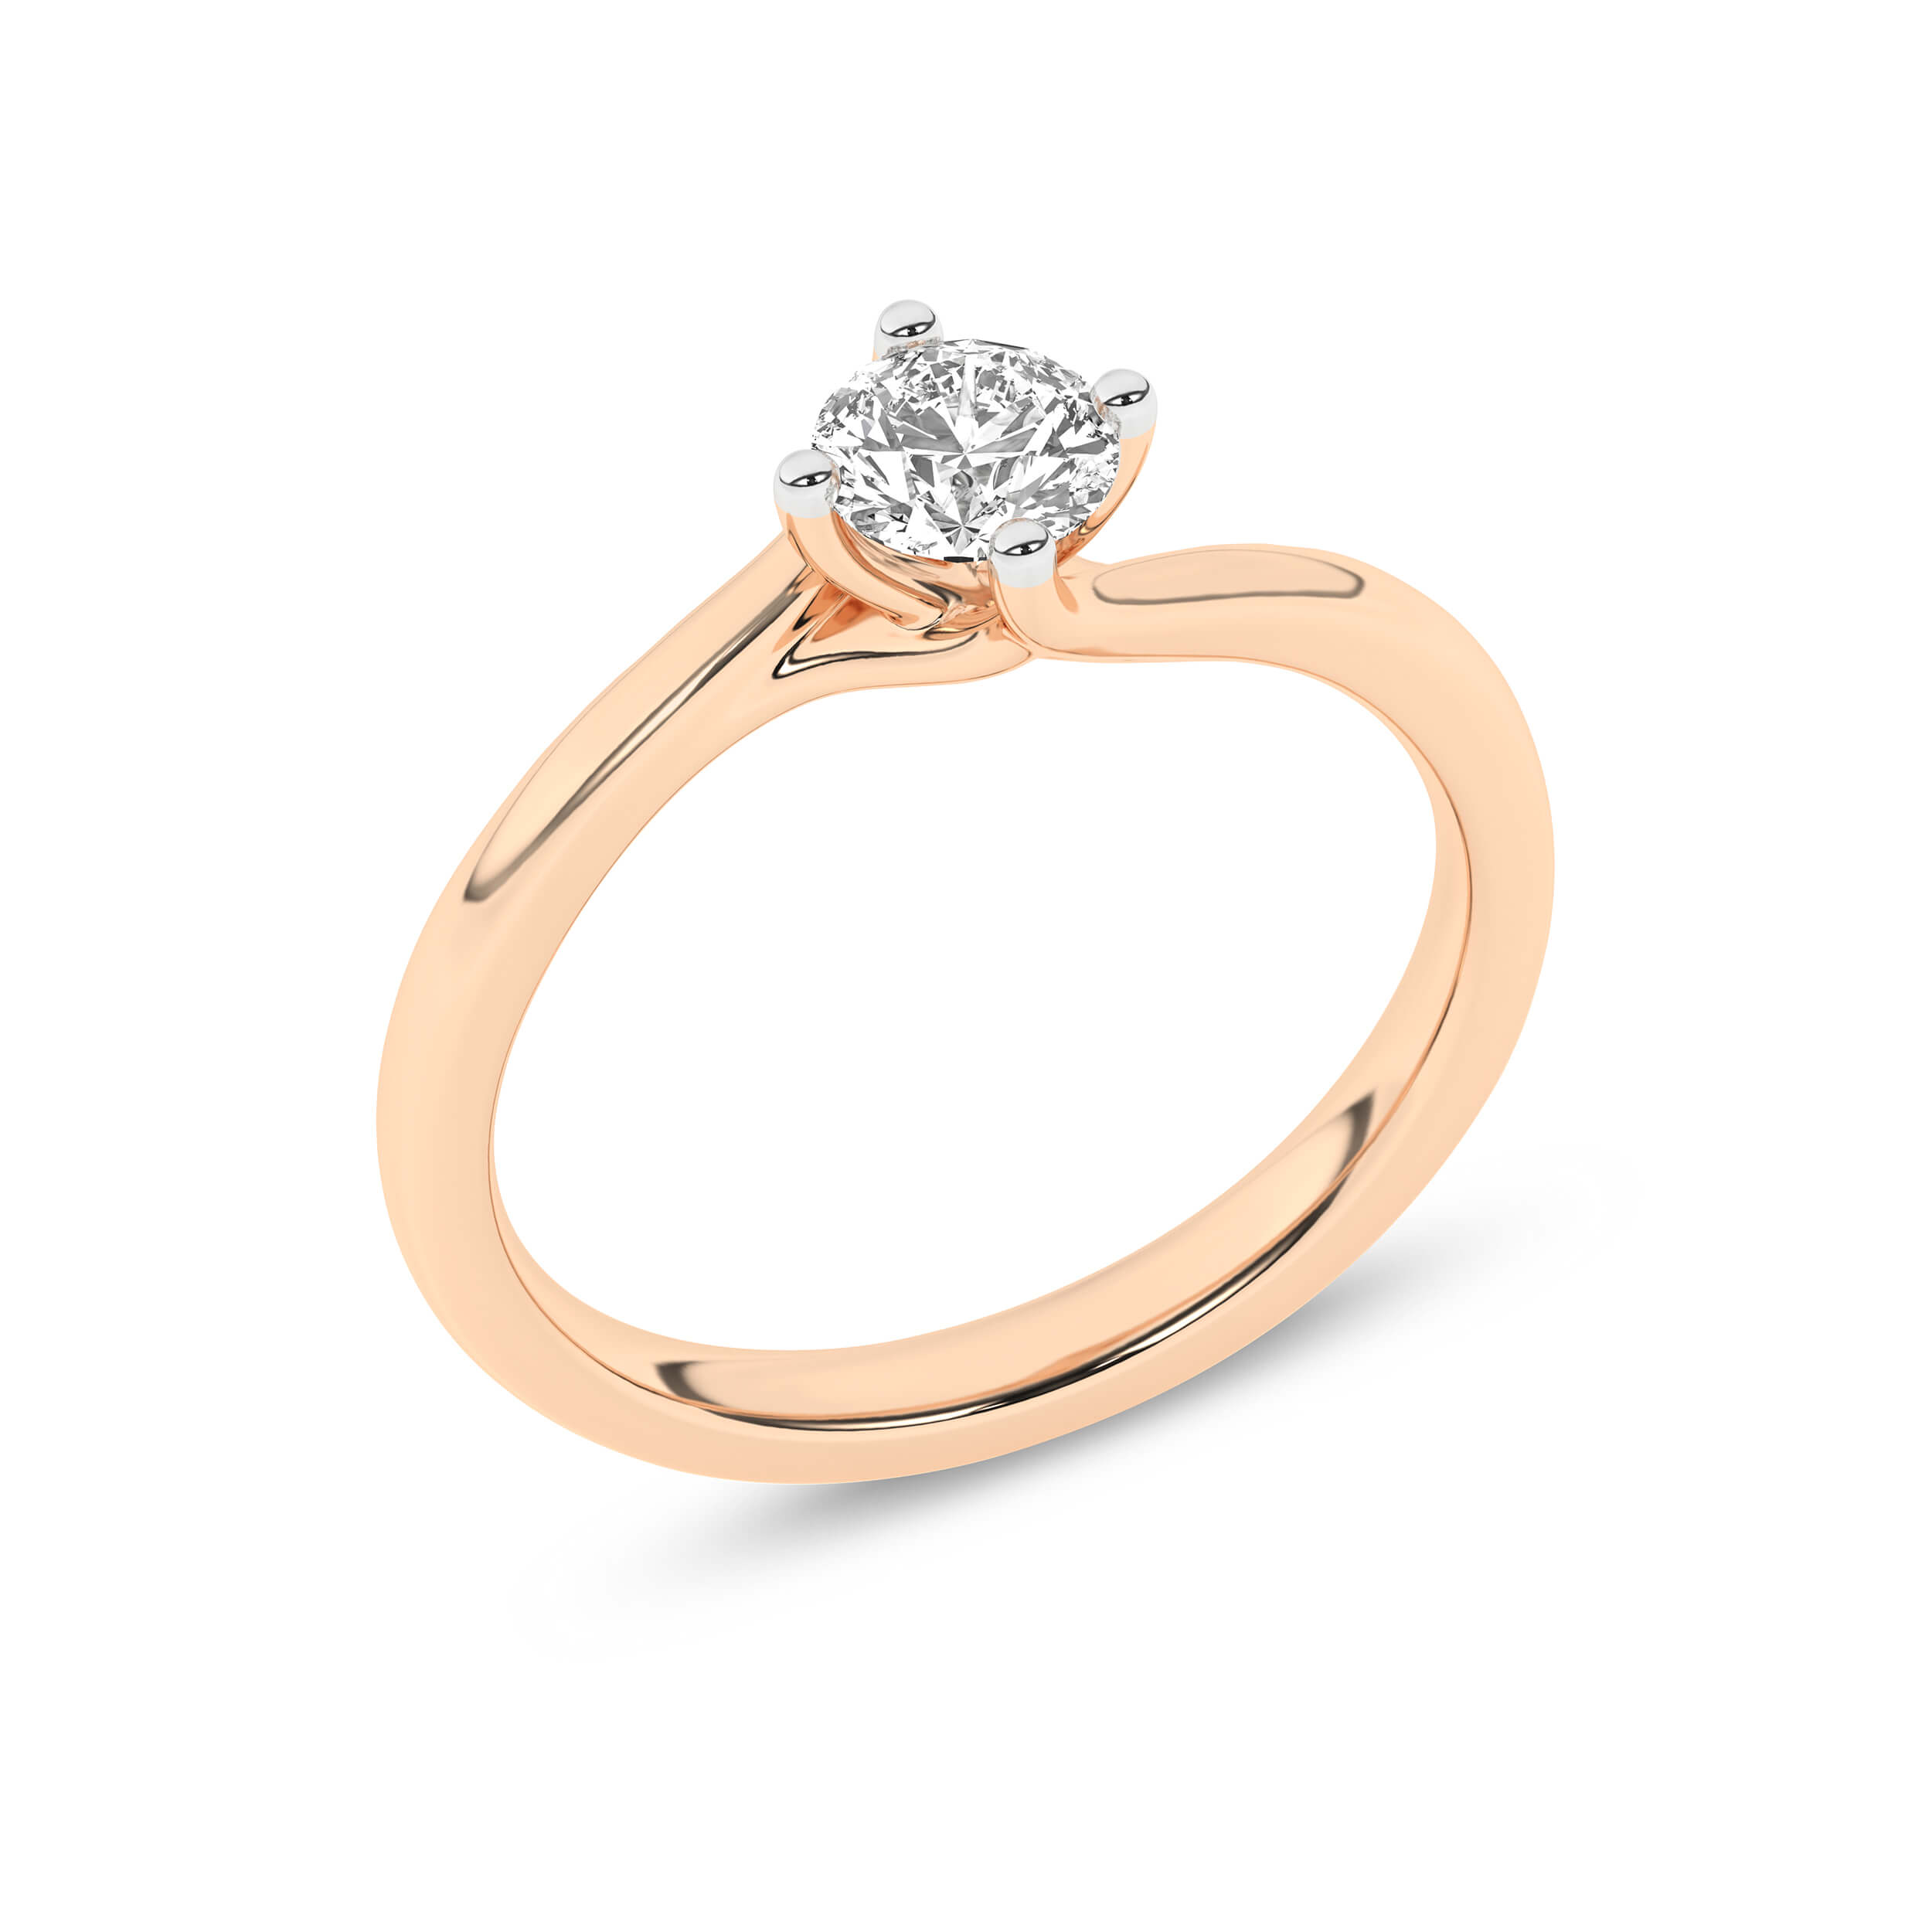 Inel de logodna din Aur Alb 14K cu Diamant 0.33Ct, articol RS1320, previzualizare foto 4